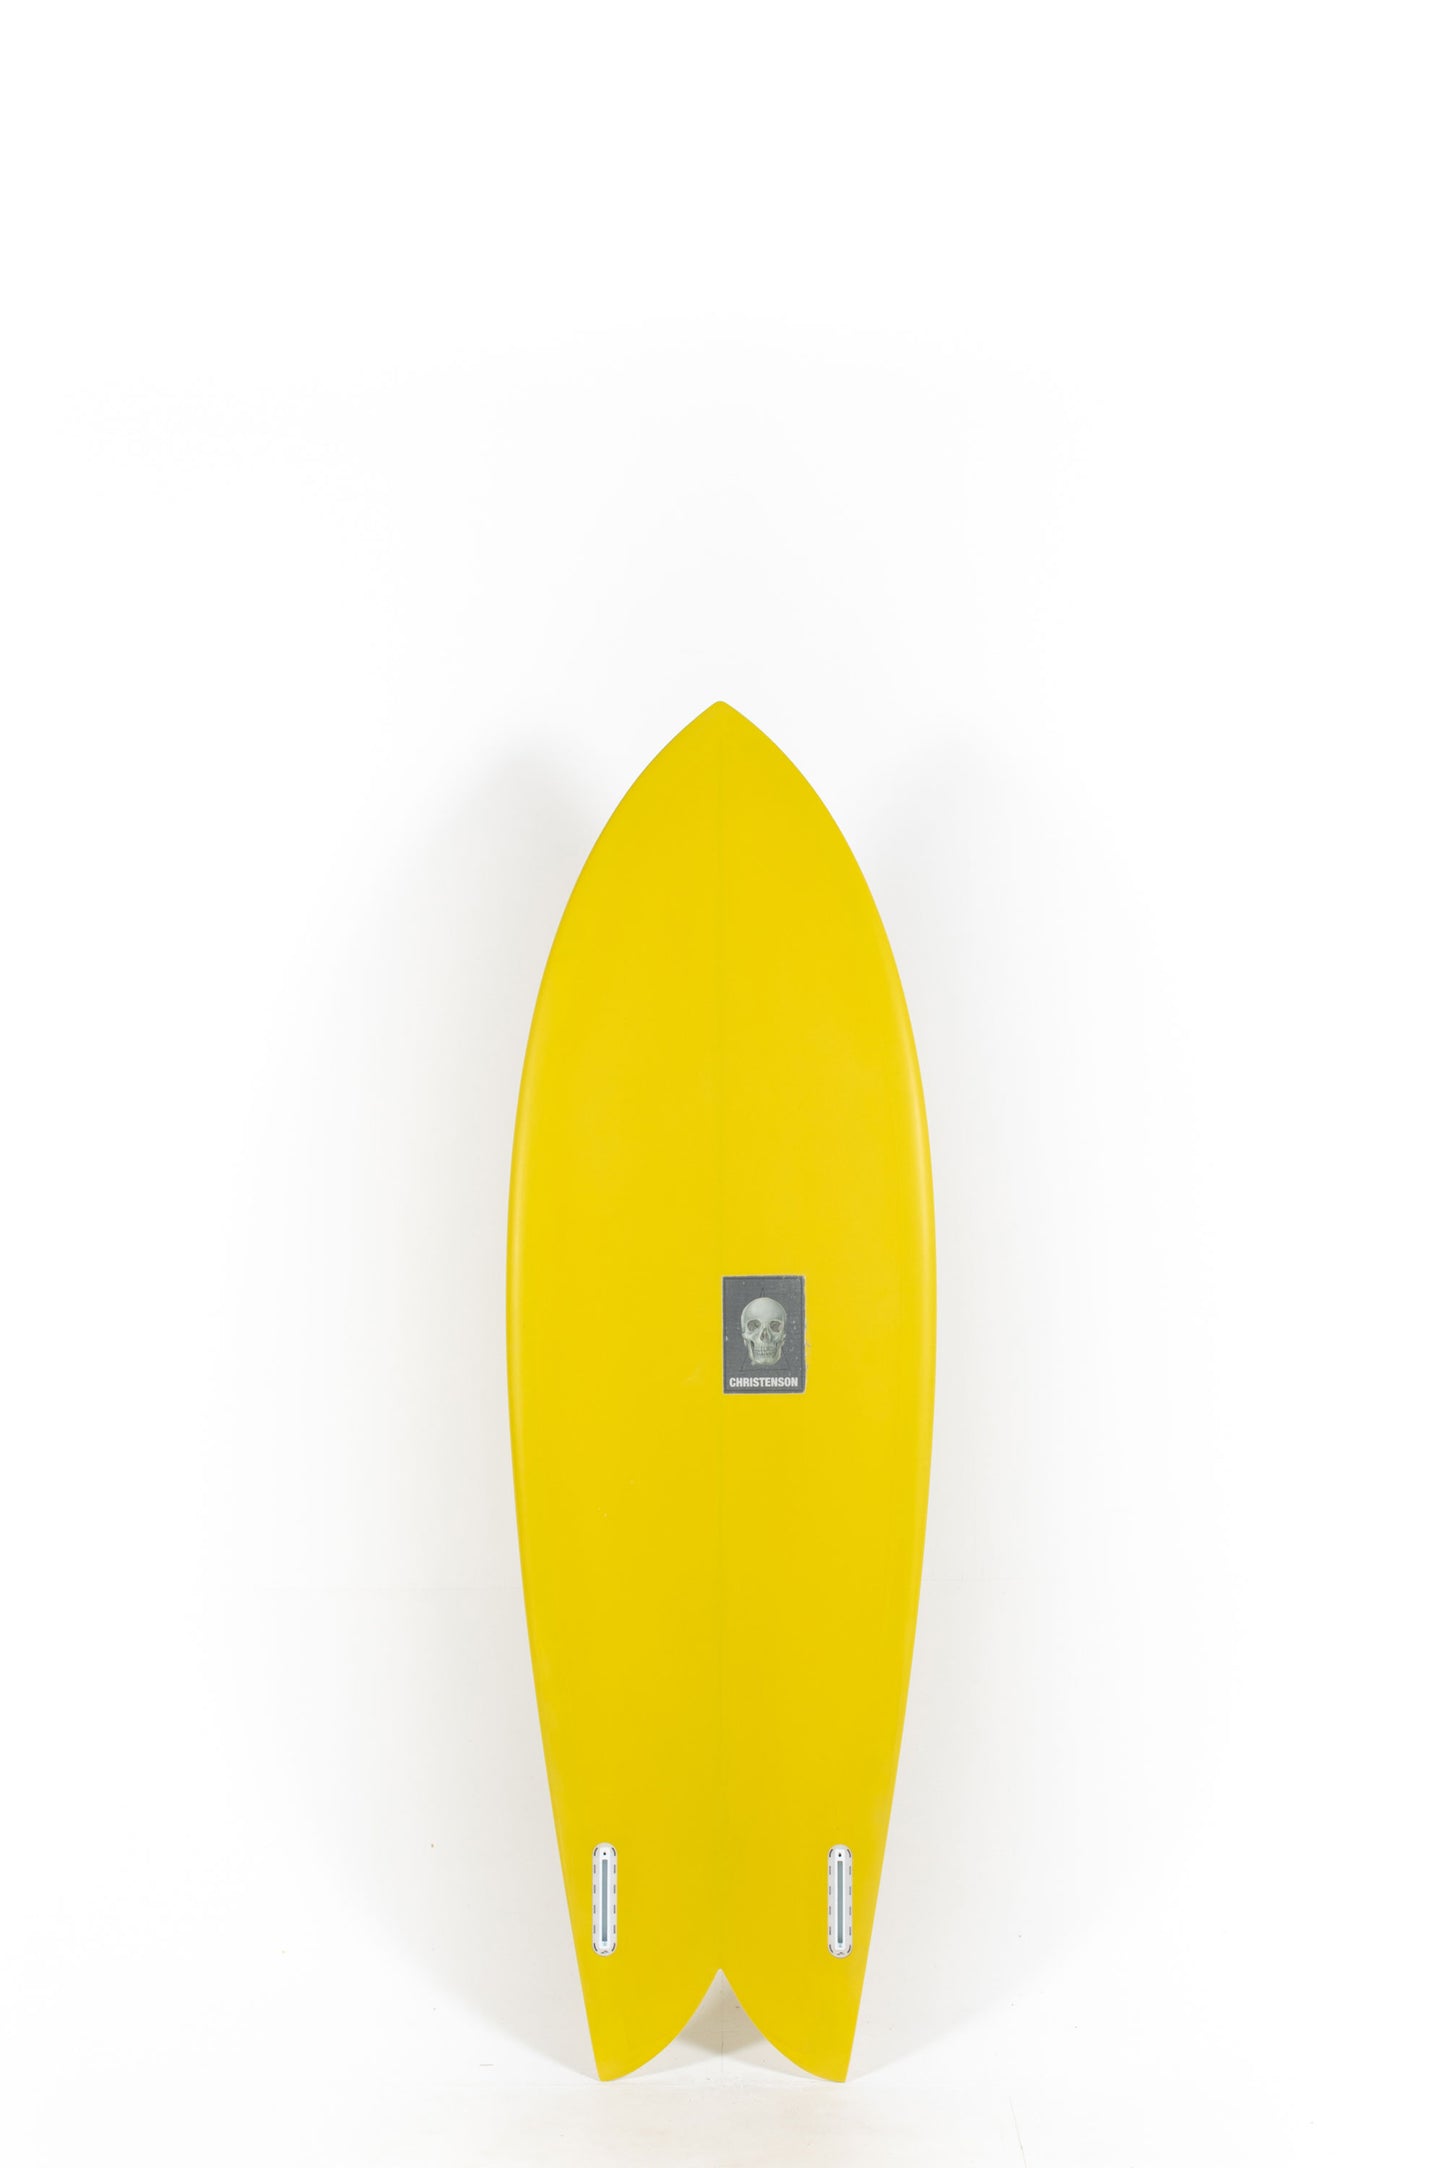 Pukas Surf Shop - Christenson Surfboards - CHRIS FISH - 5'10" x 21 1/2 x 2 9/16 - 